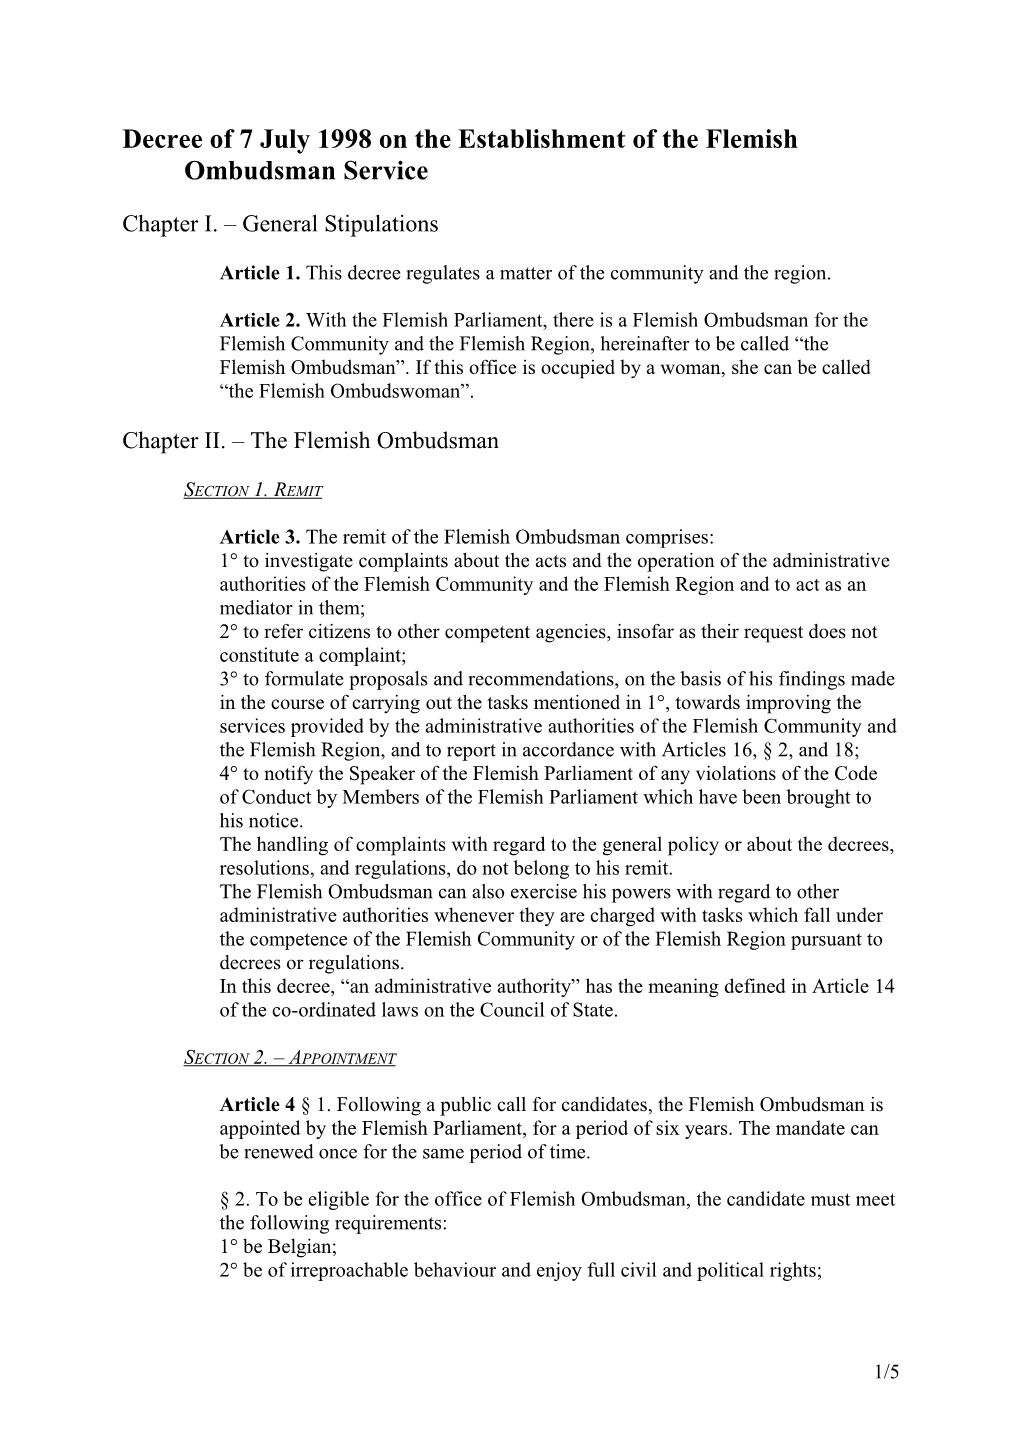 Decree of 7 July 1998 on the Establishment of the Flemish Ombudsman Service